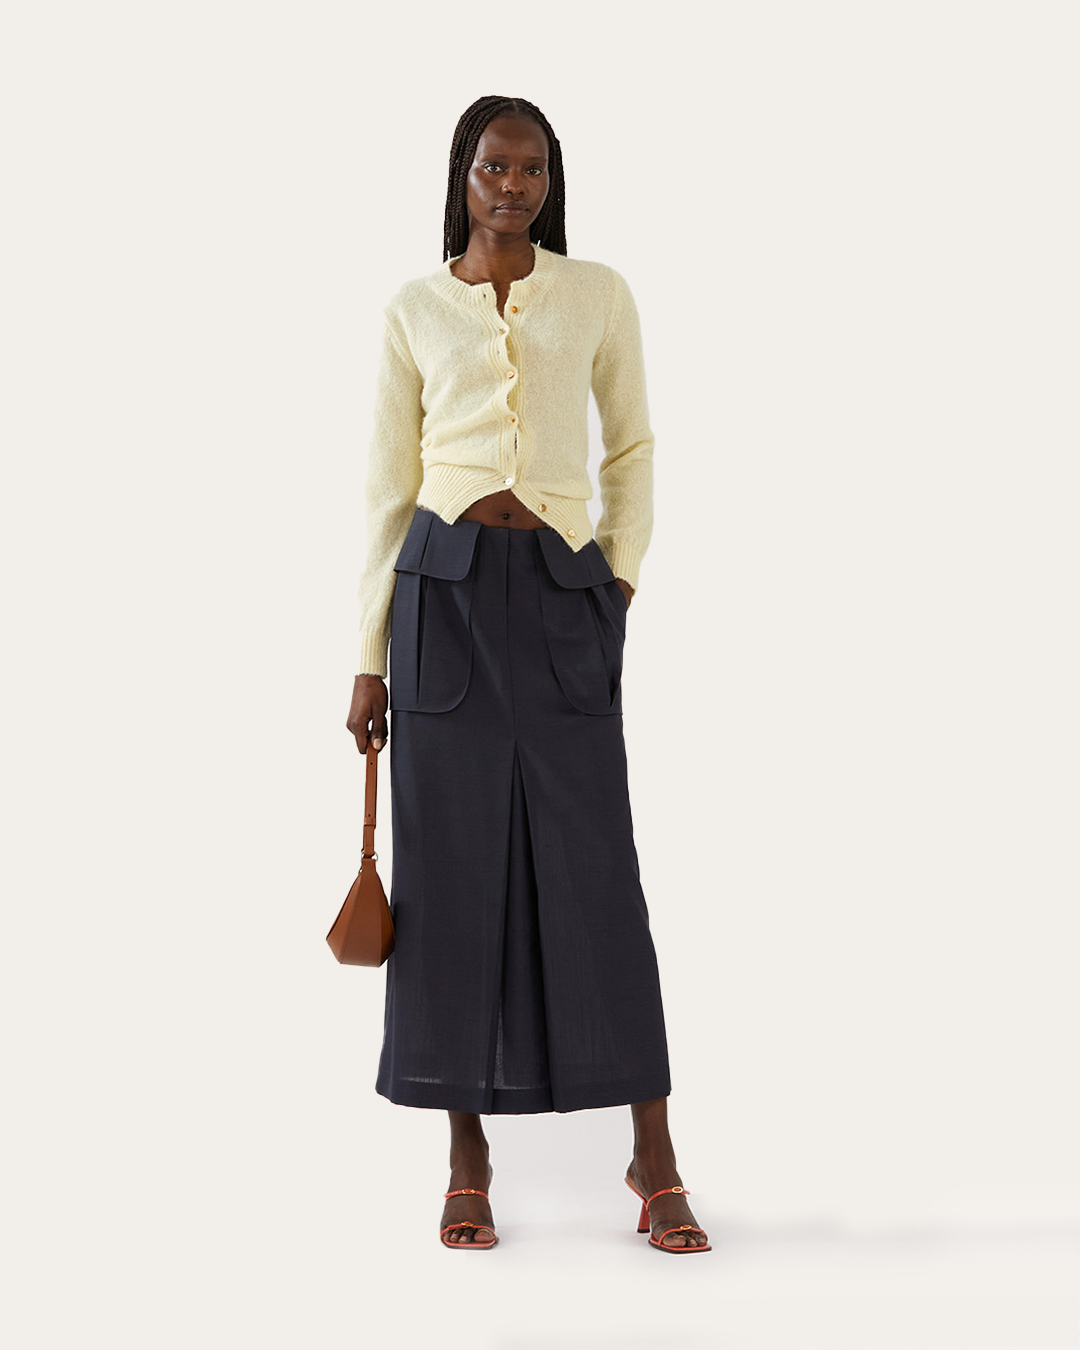 Lila Skirt Wool Blend Suiting Slate